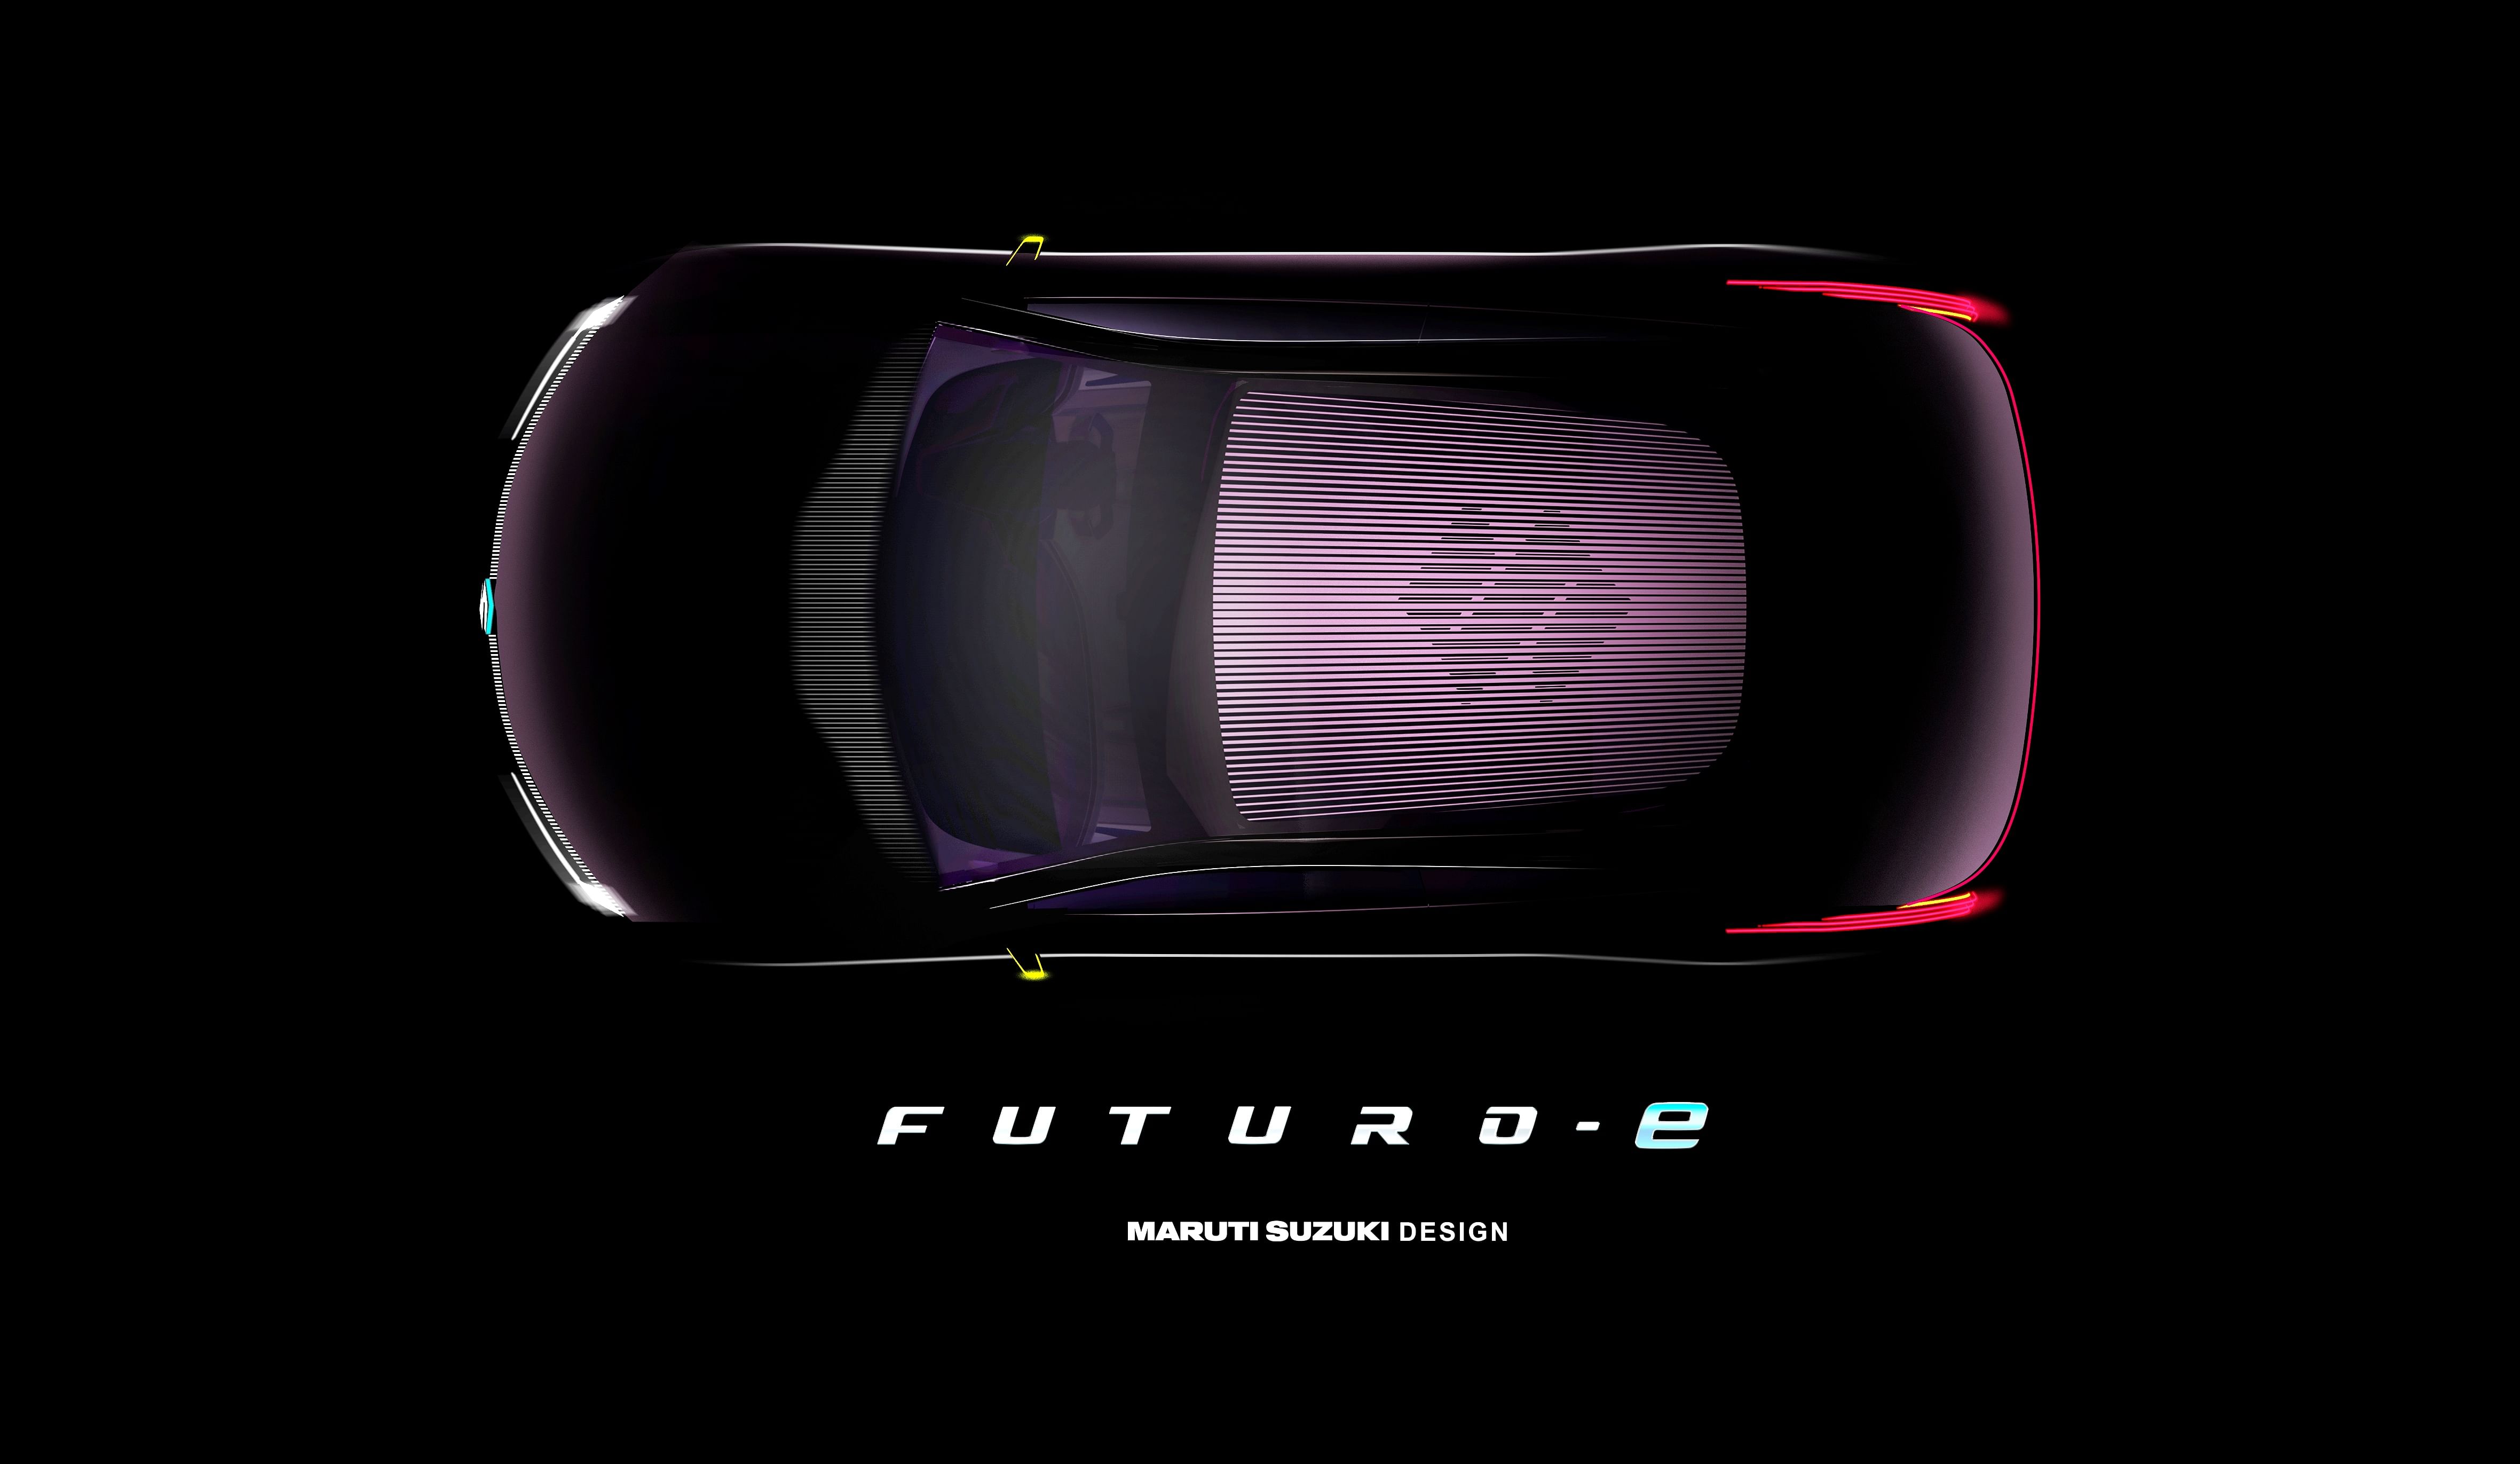 Maruti Suzuki is expected to show their electric concept car Futuro-E at the Auto Expo